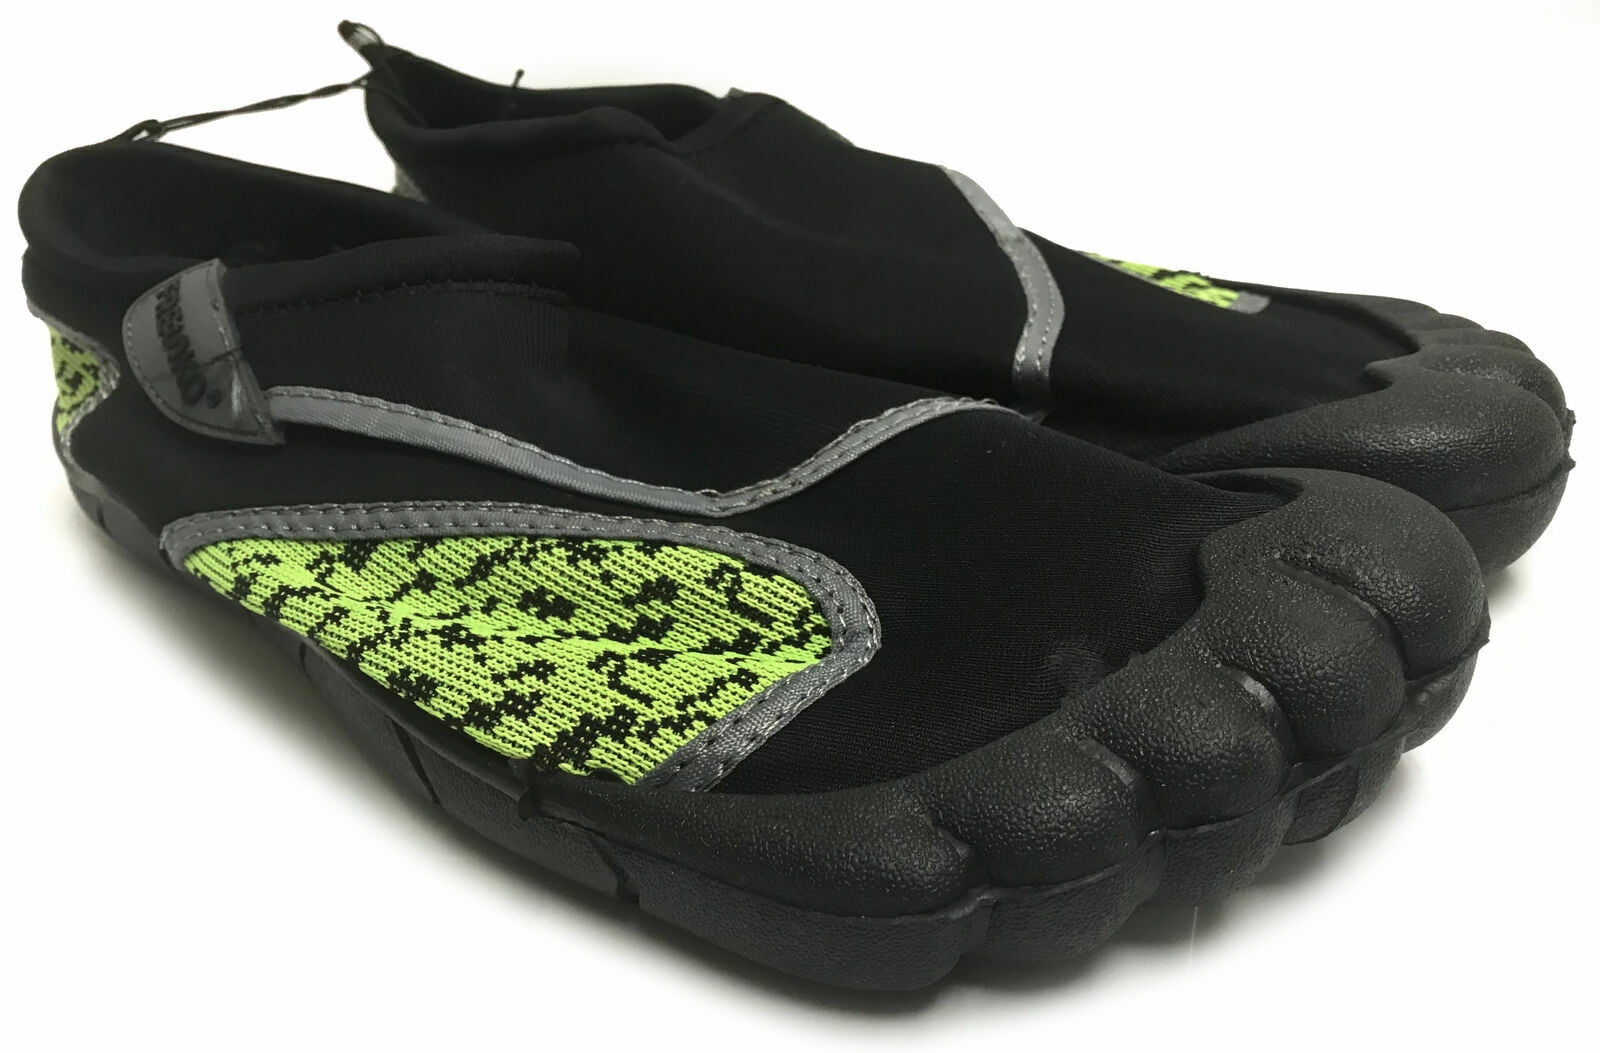 11 Medium US Details about   Fresko Men's Slip On Comfort Water Shoes Black and Green 